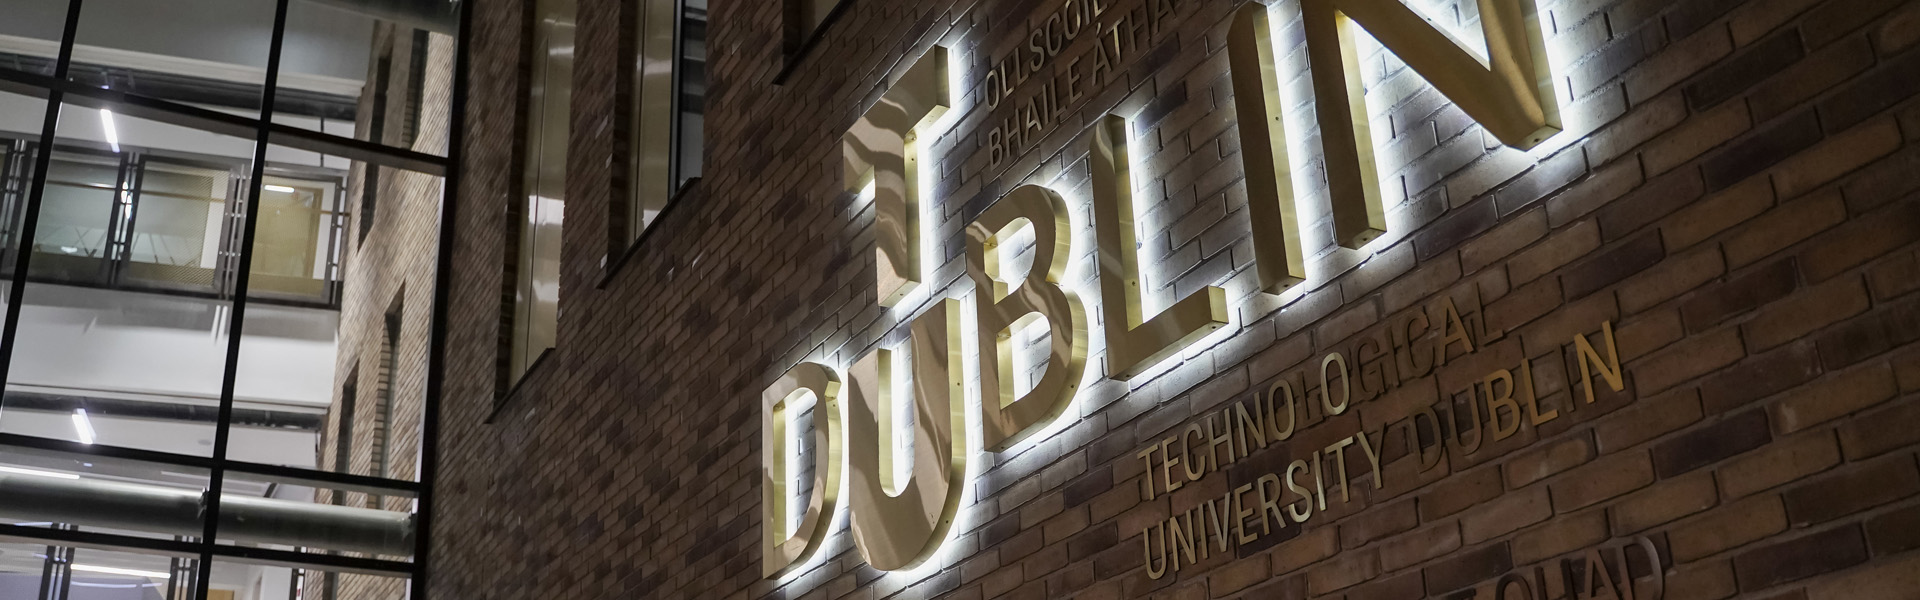 TU Dublin logo brass sign on East Quad building